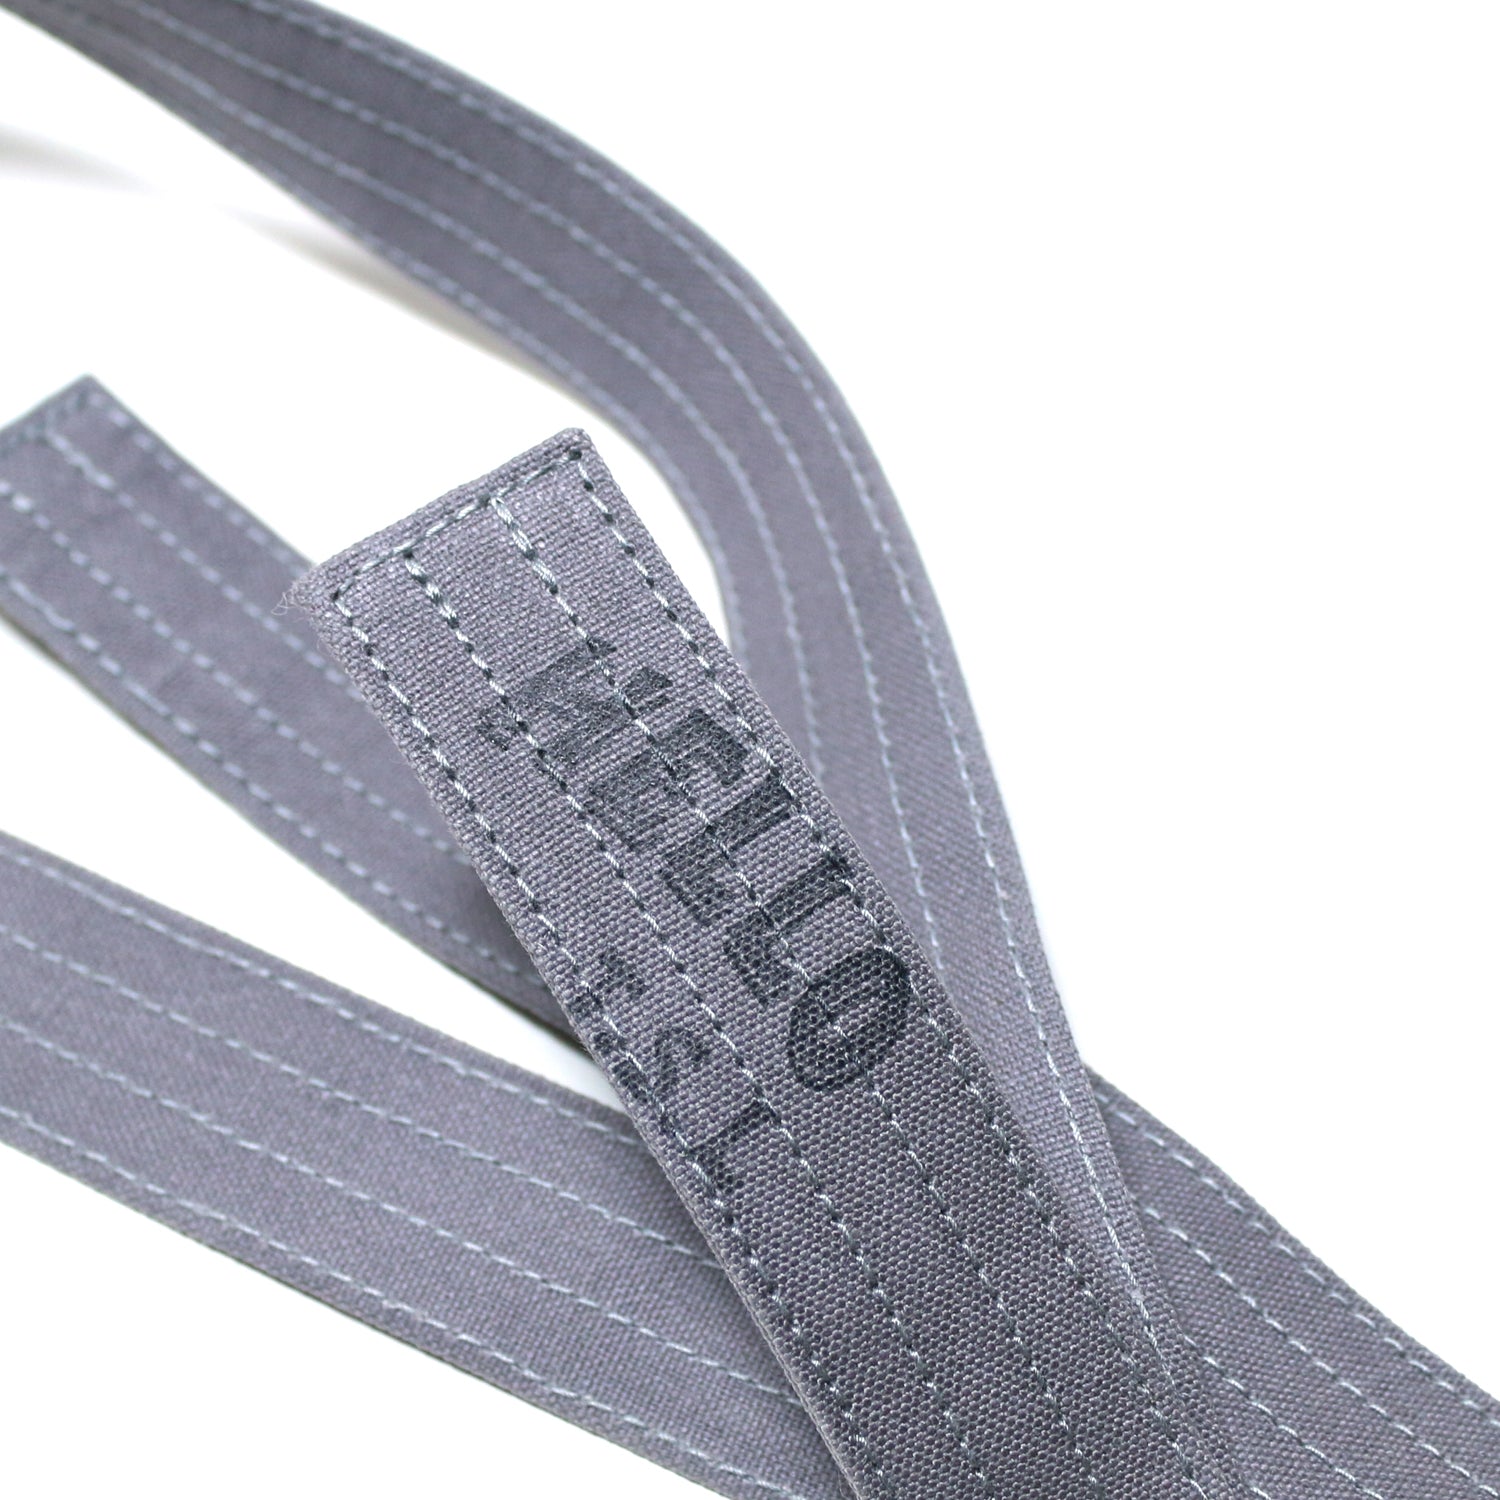 SL0027  ”Hello TSL” strap